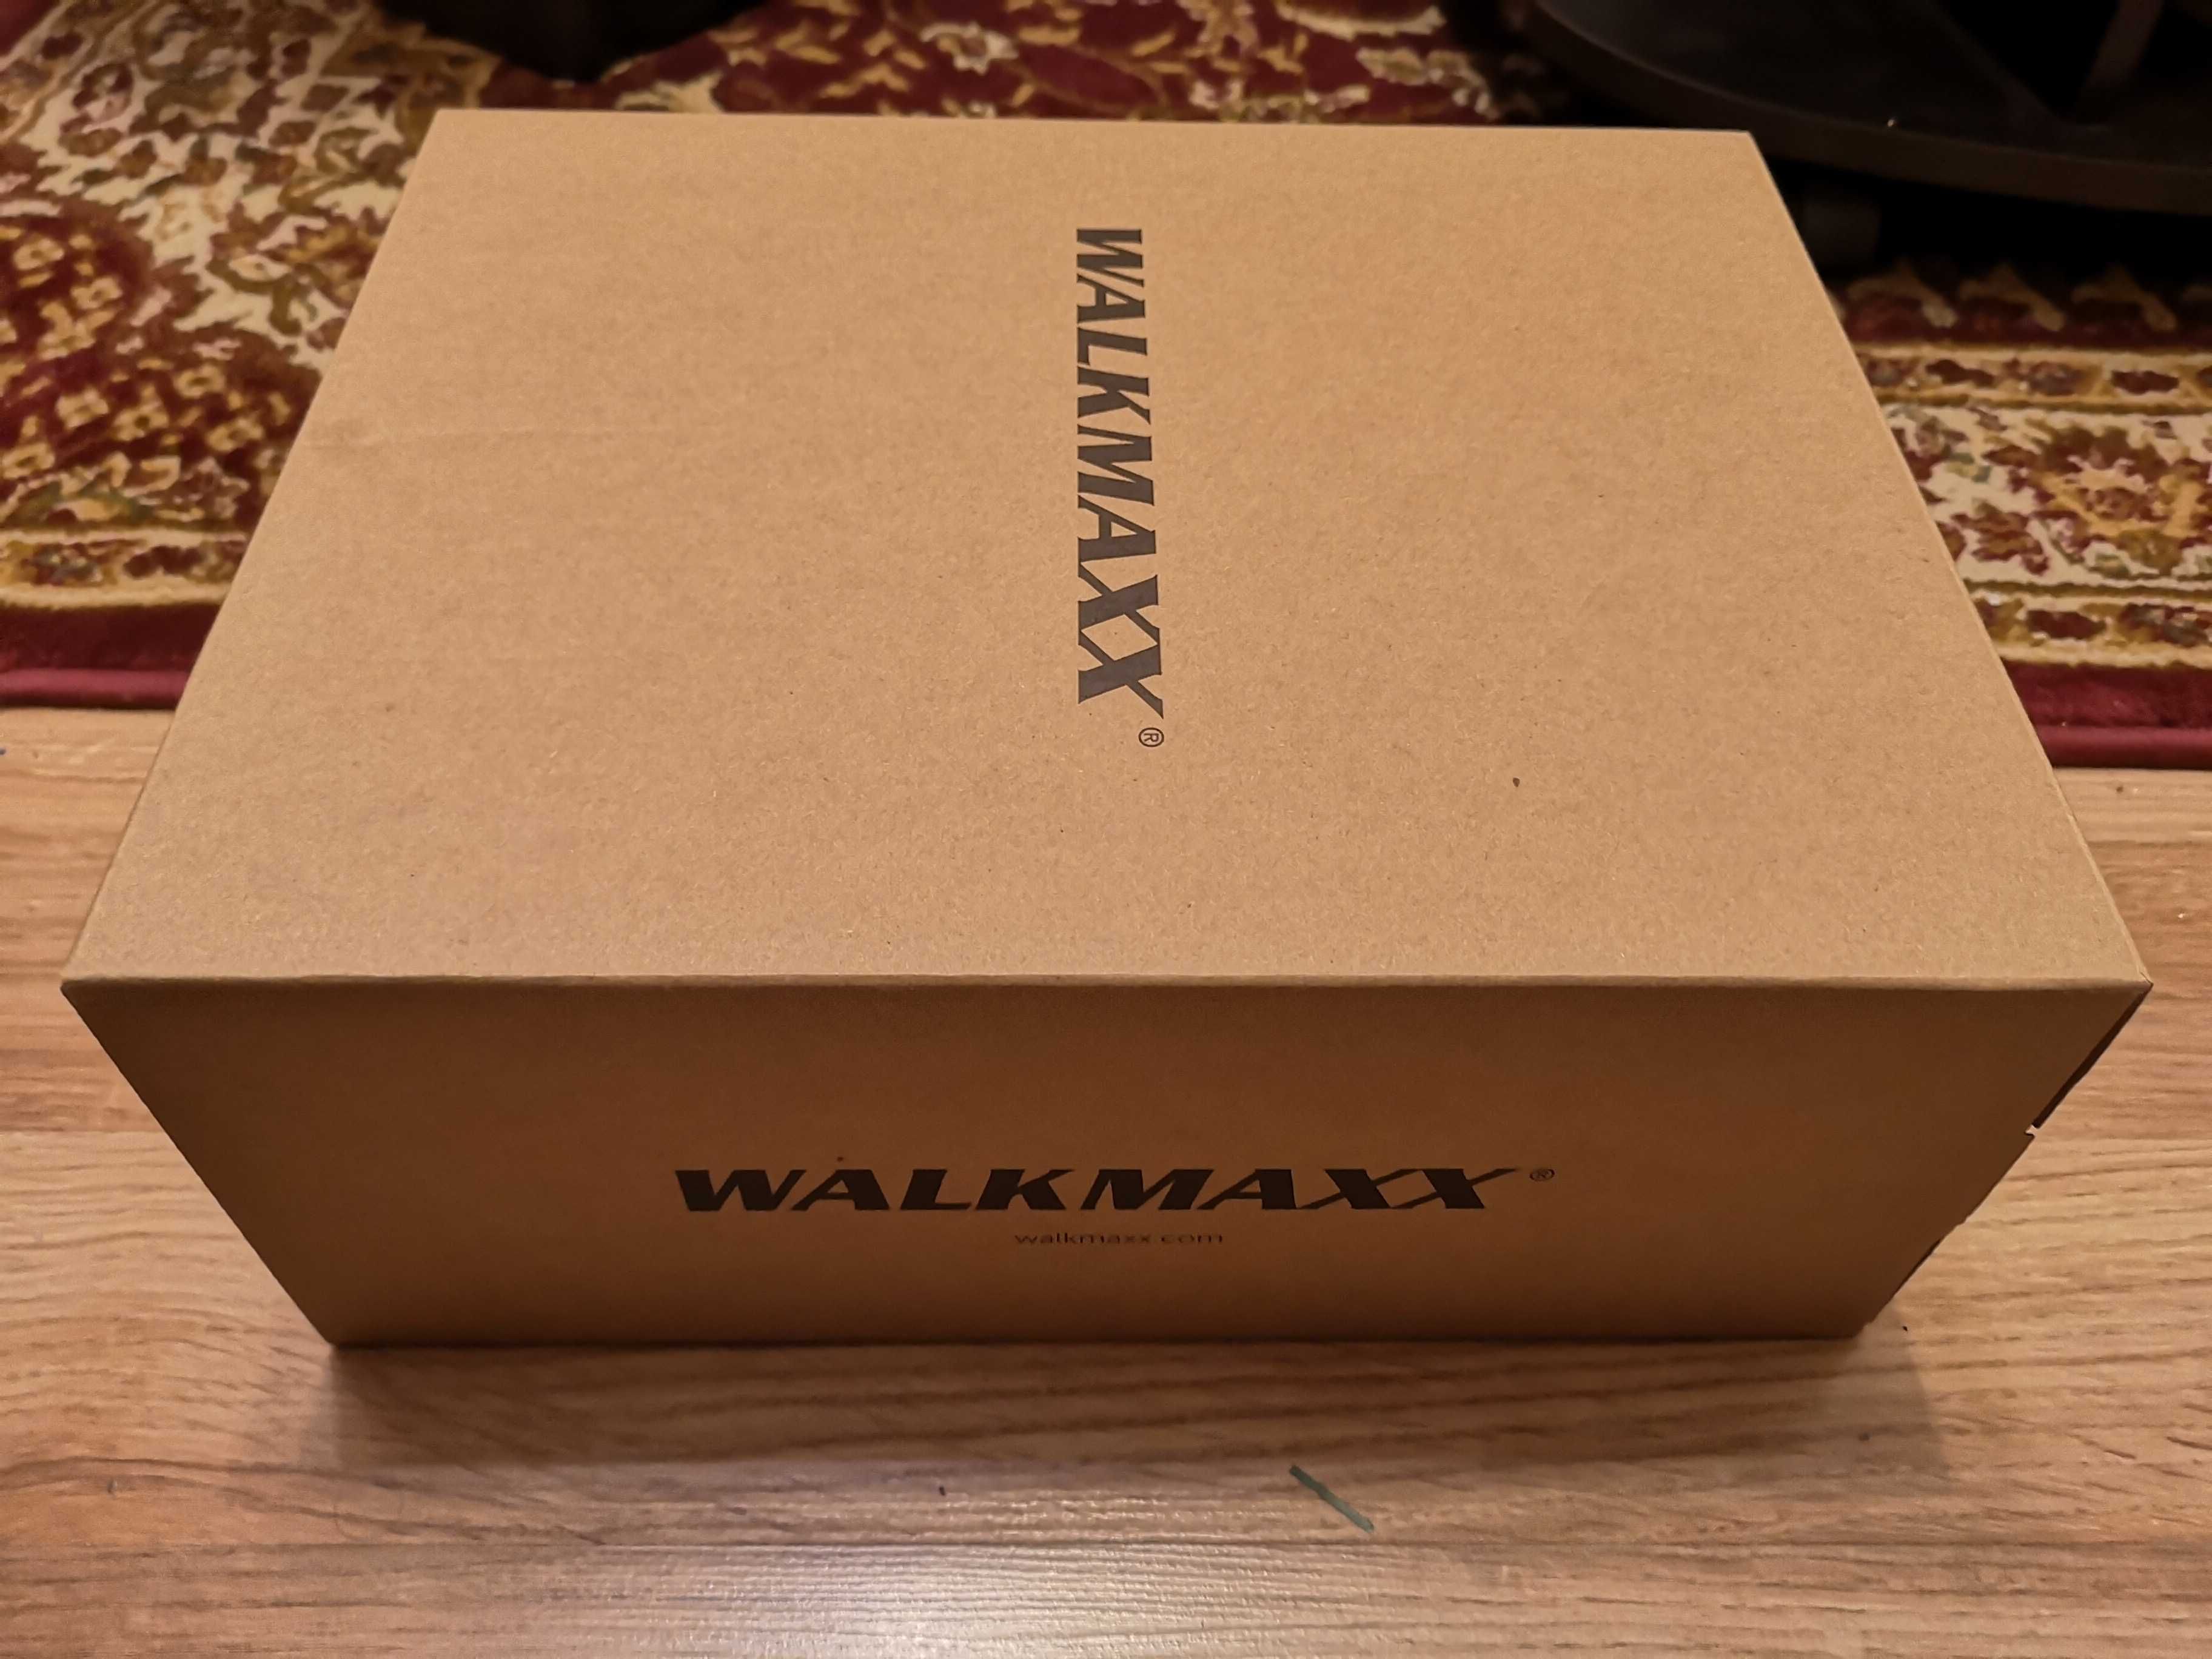 Adidasi Walkmaxx Fit signature albi